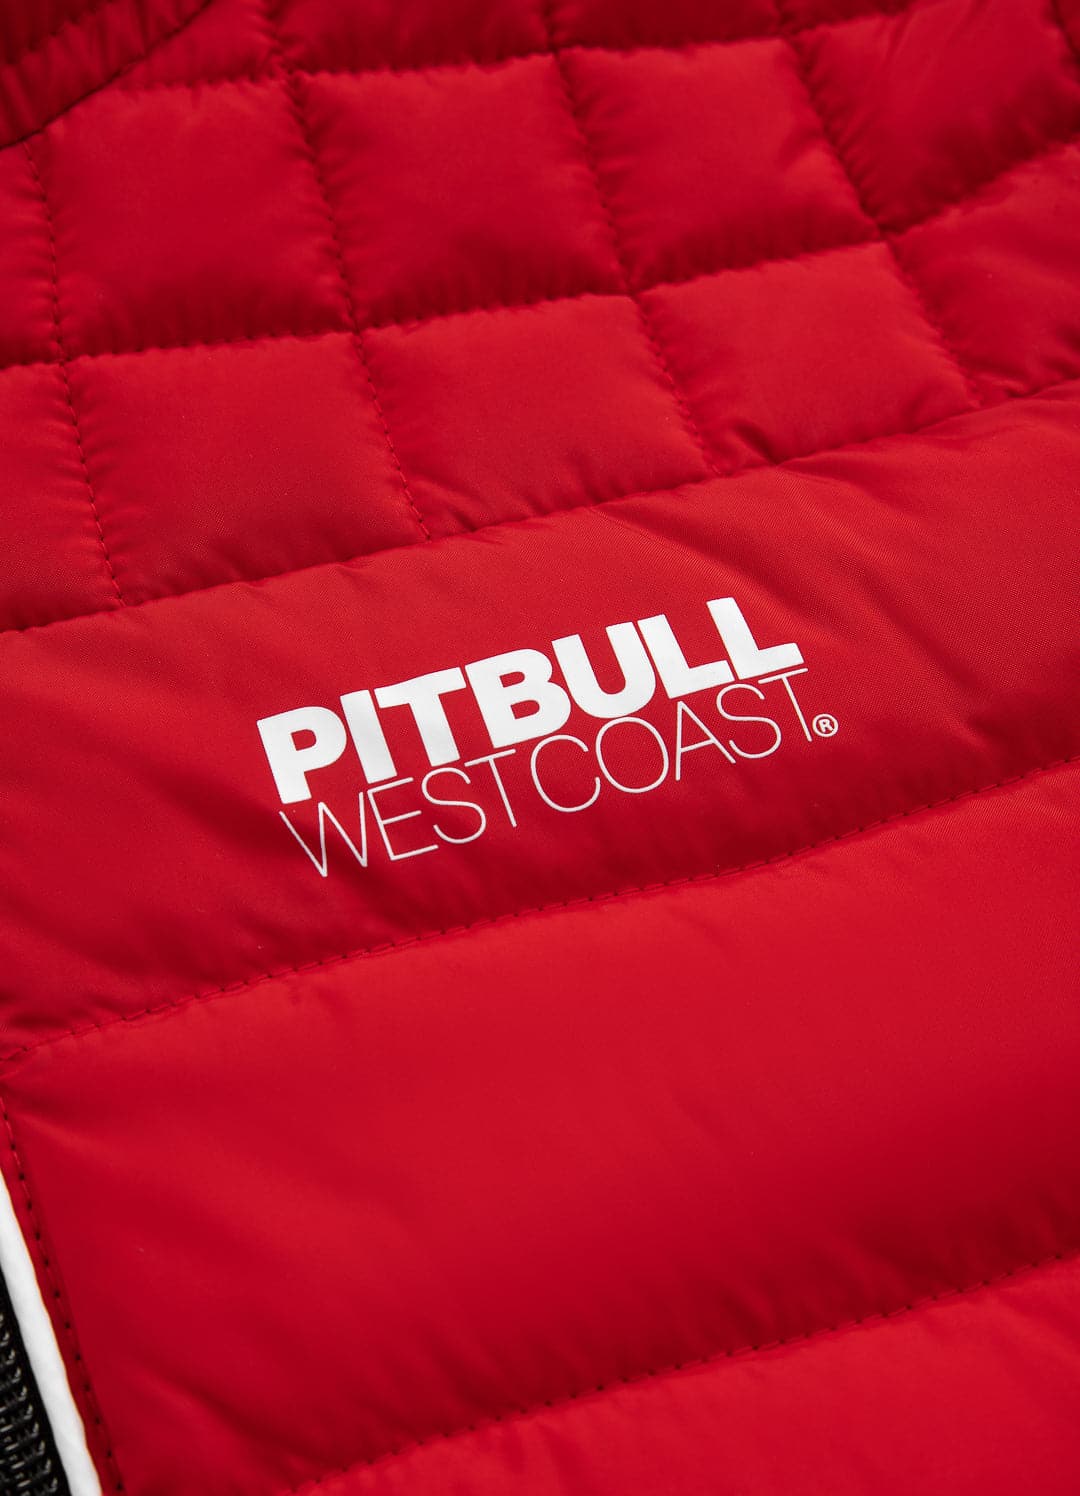 SEACOAST Kids Red Jacket - Pitbull West Coast International Store 